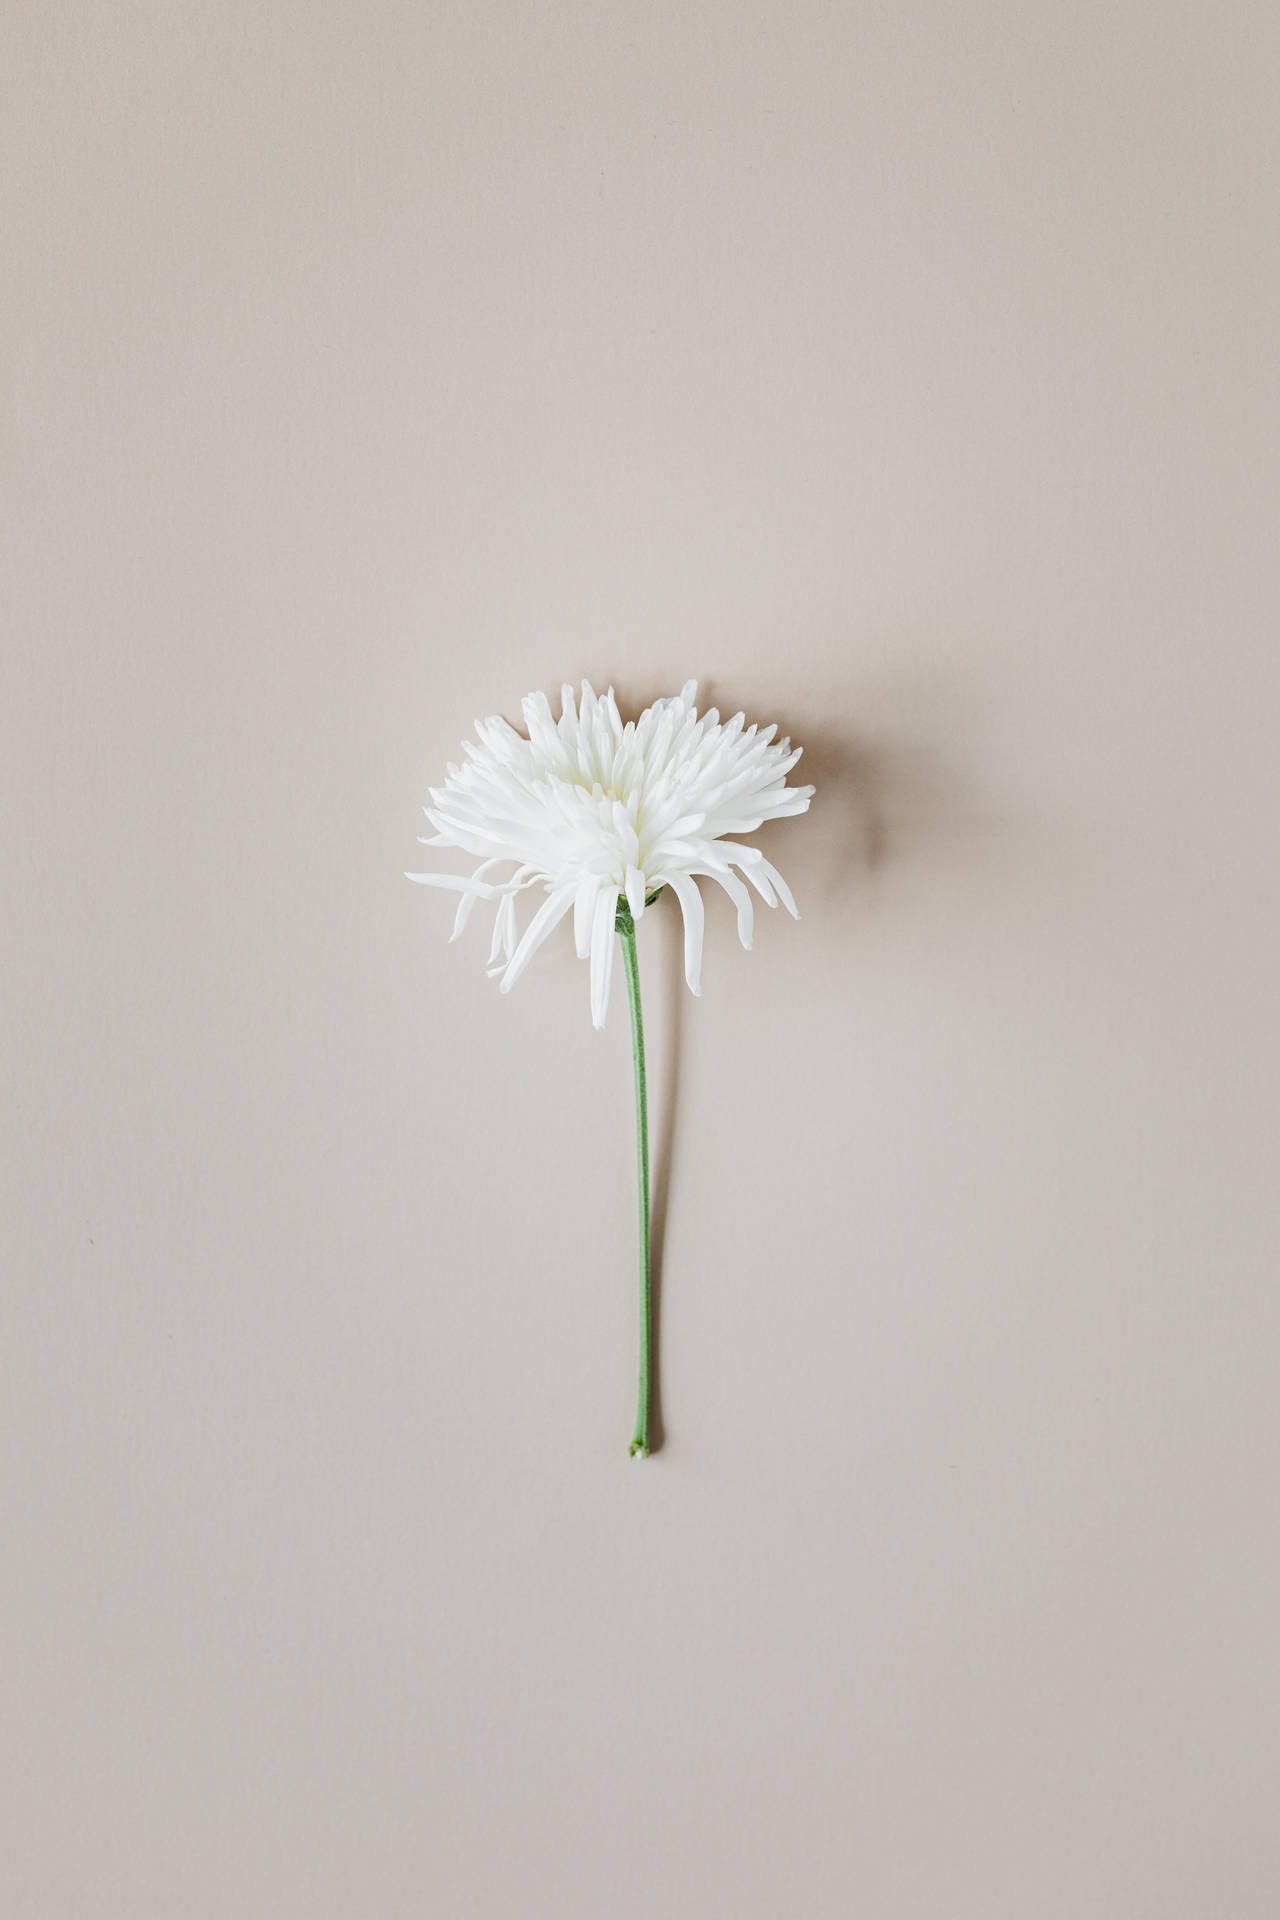 A White Flower On A Beige Wall Wallpaper